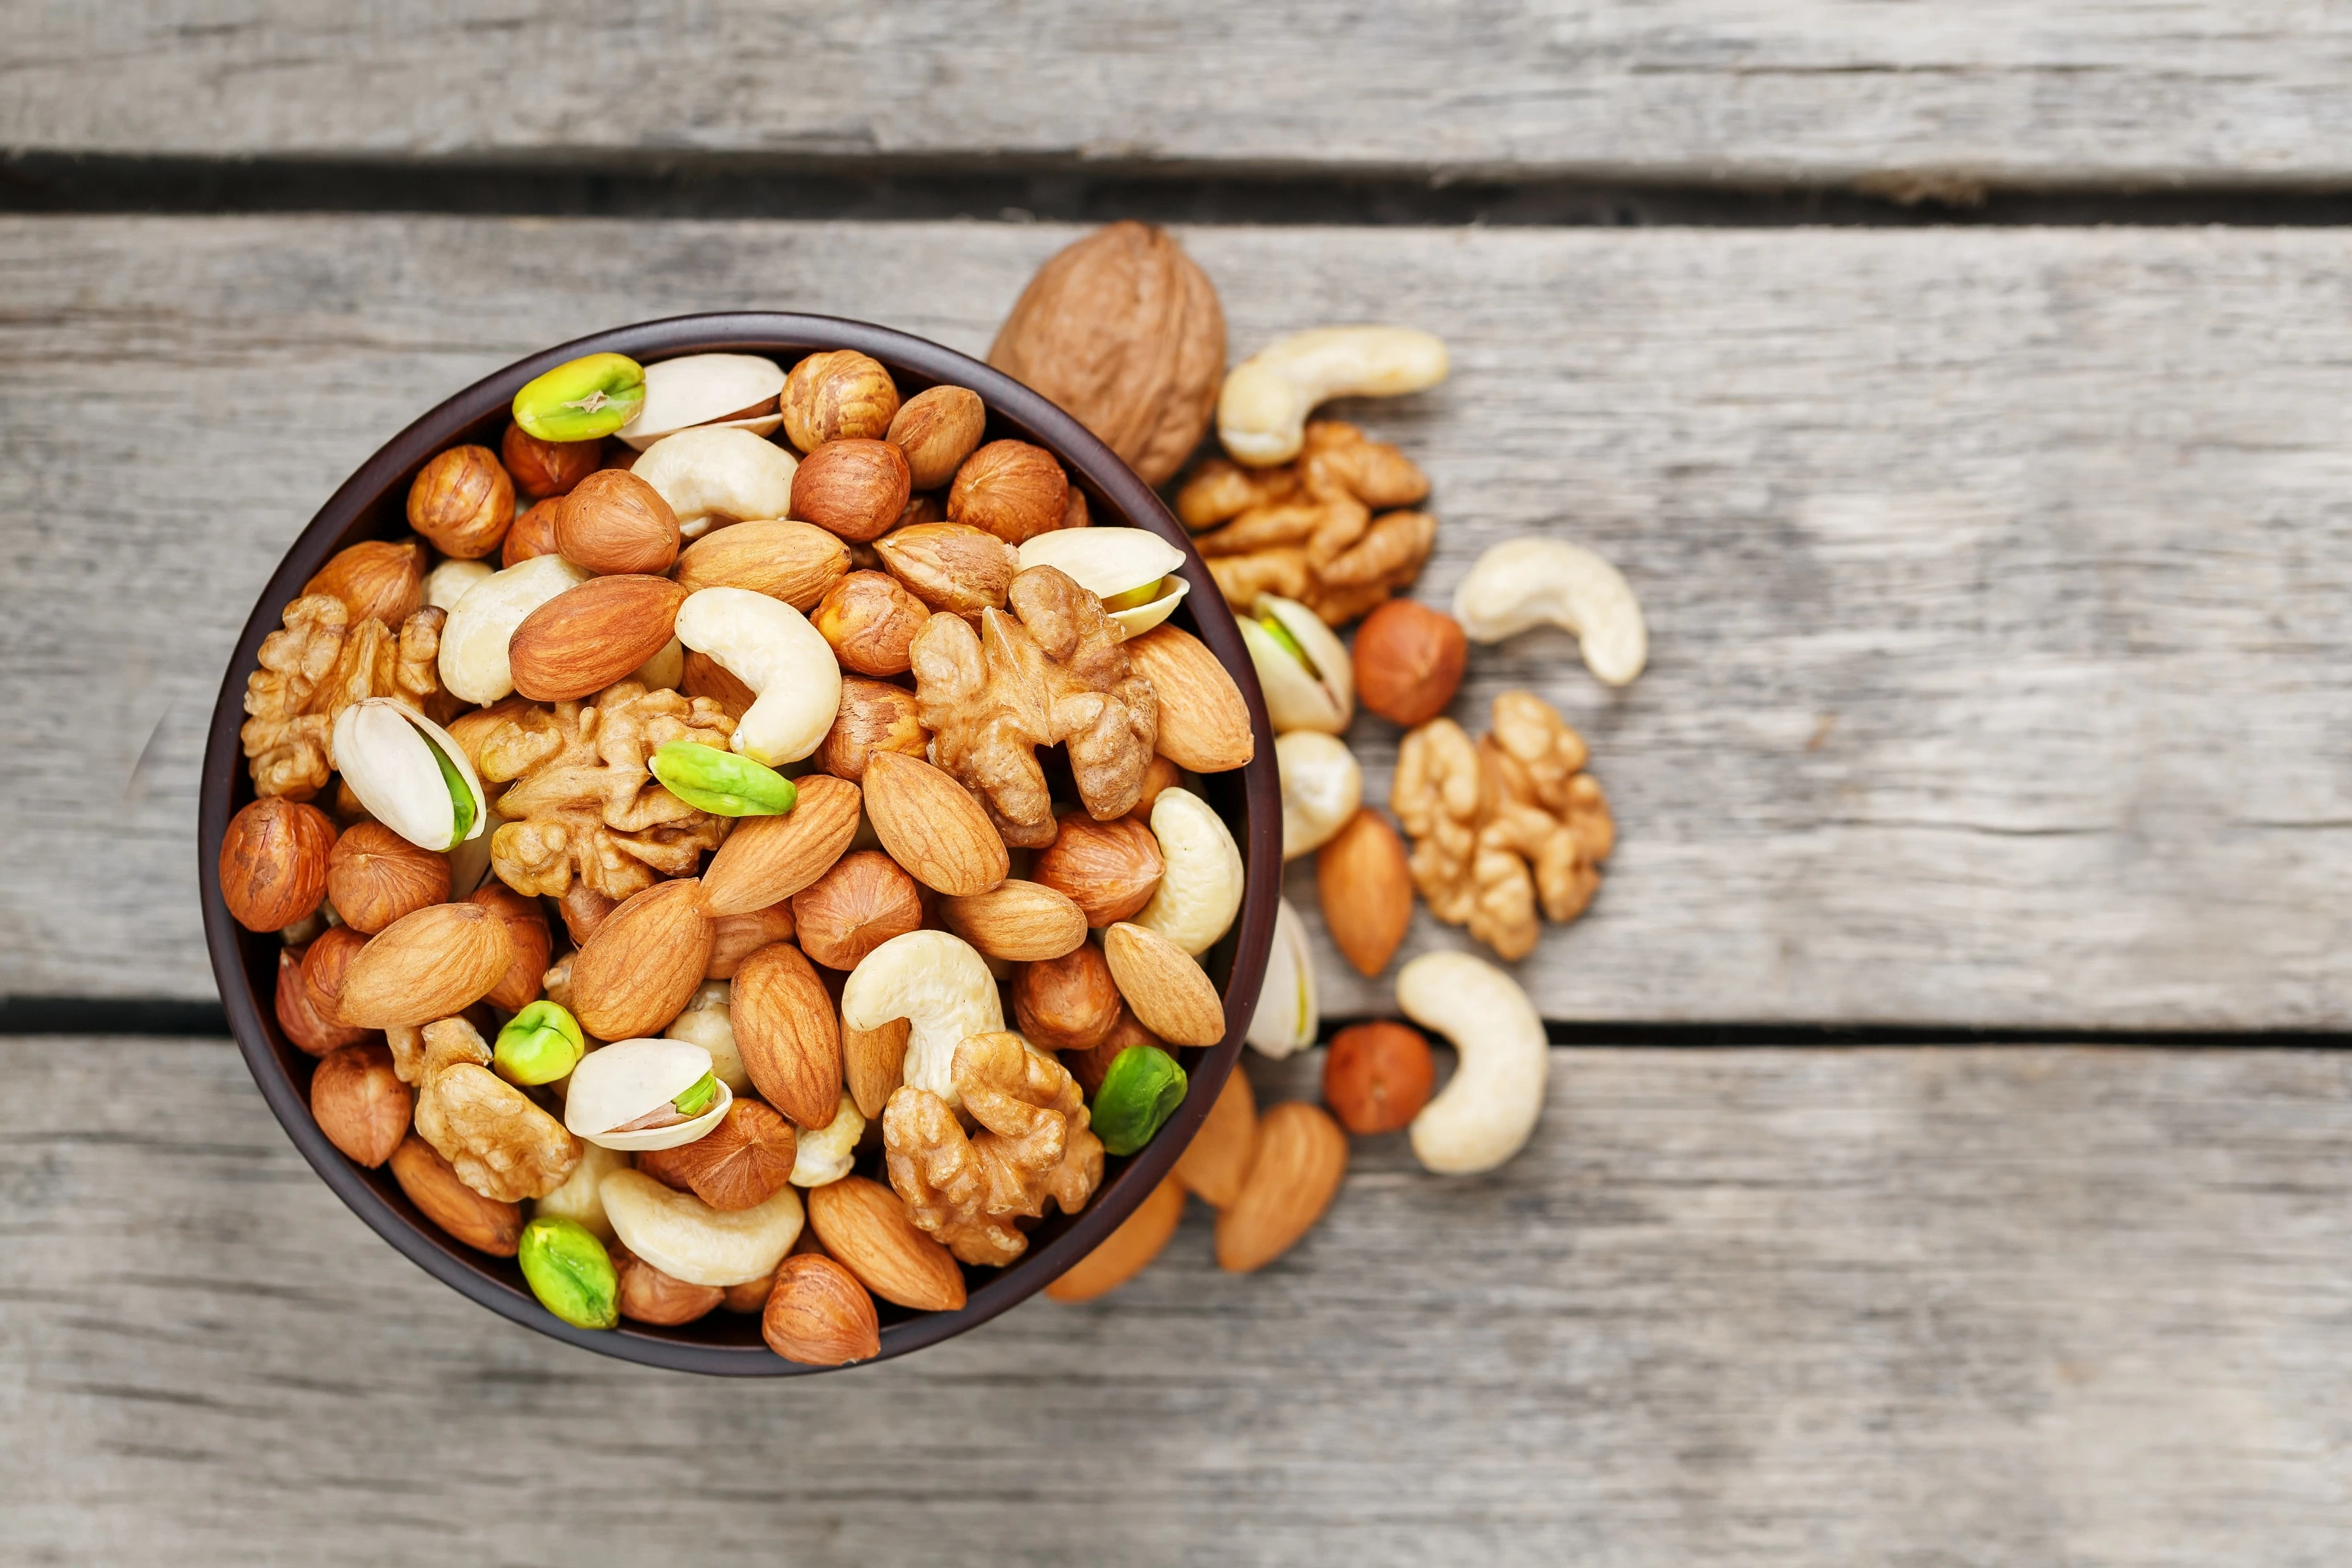 Mixed nuts walnut pistachios almonds hazelnuts cashews in wooden bowl